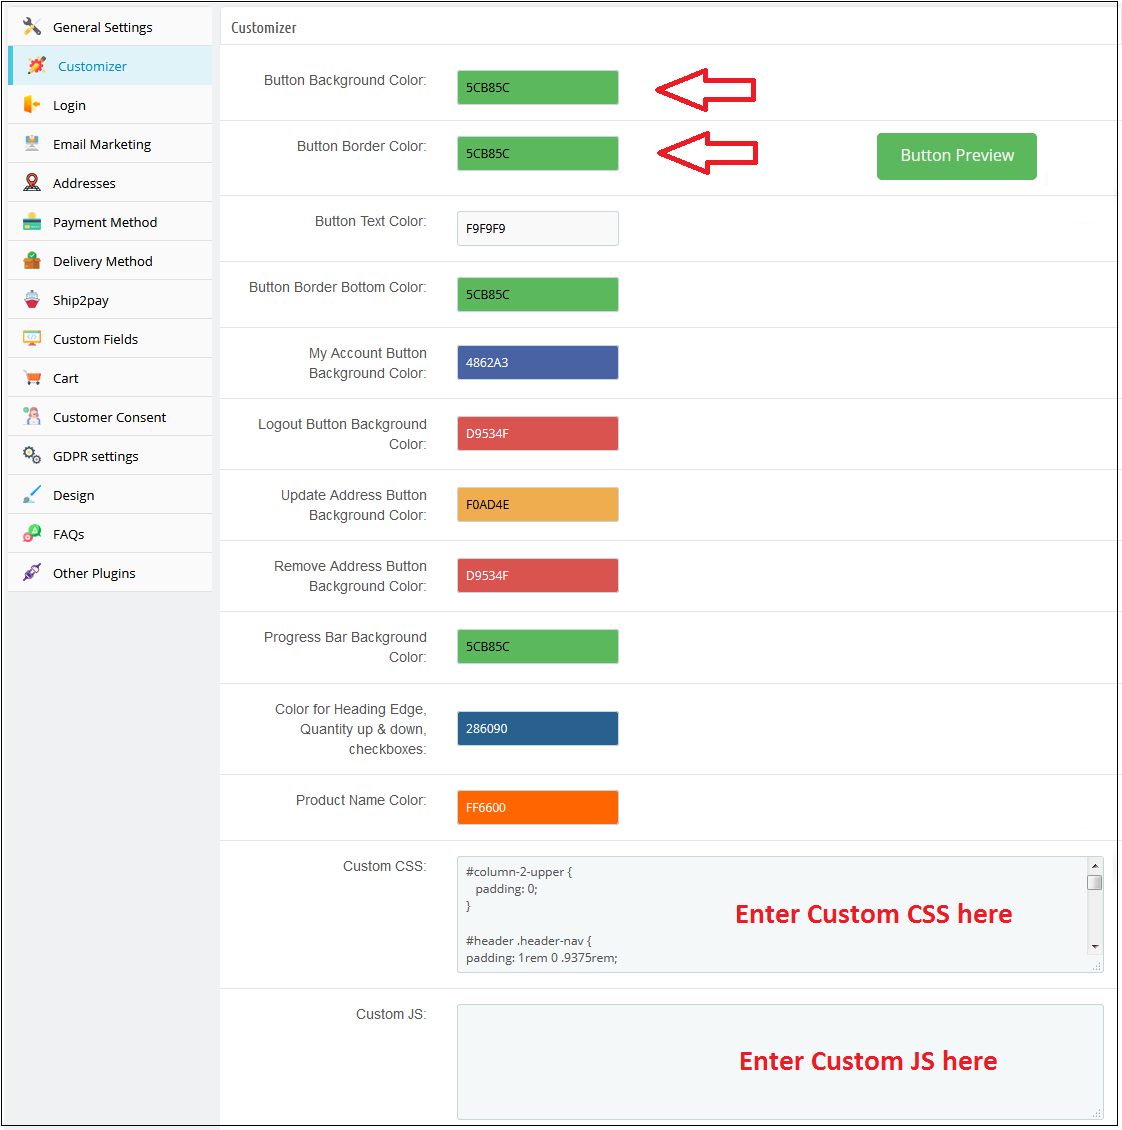 knowband-prestashop-one-page-checkout-module-admin-interface-customizer-settings